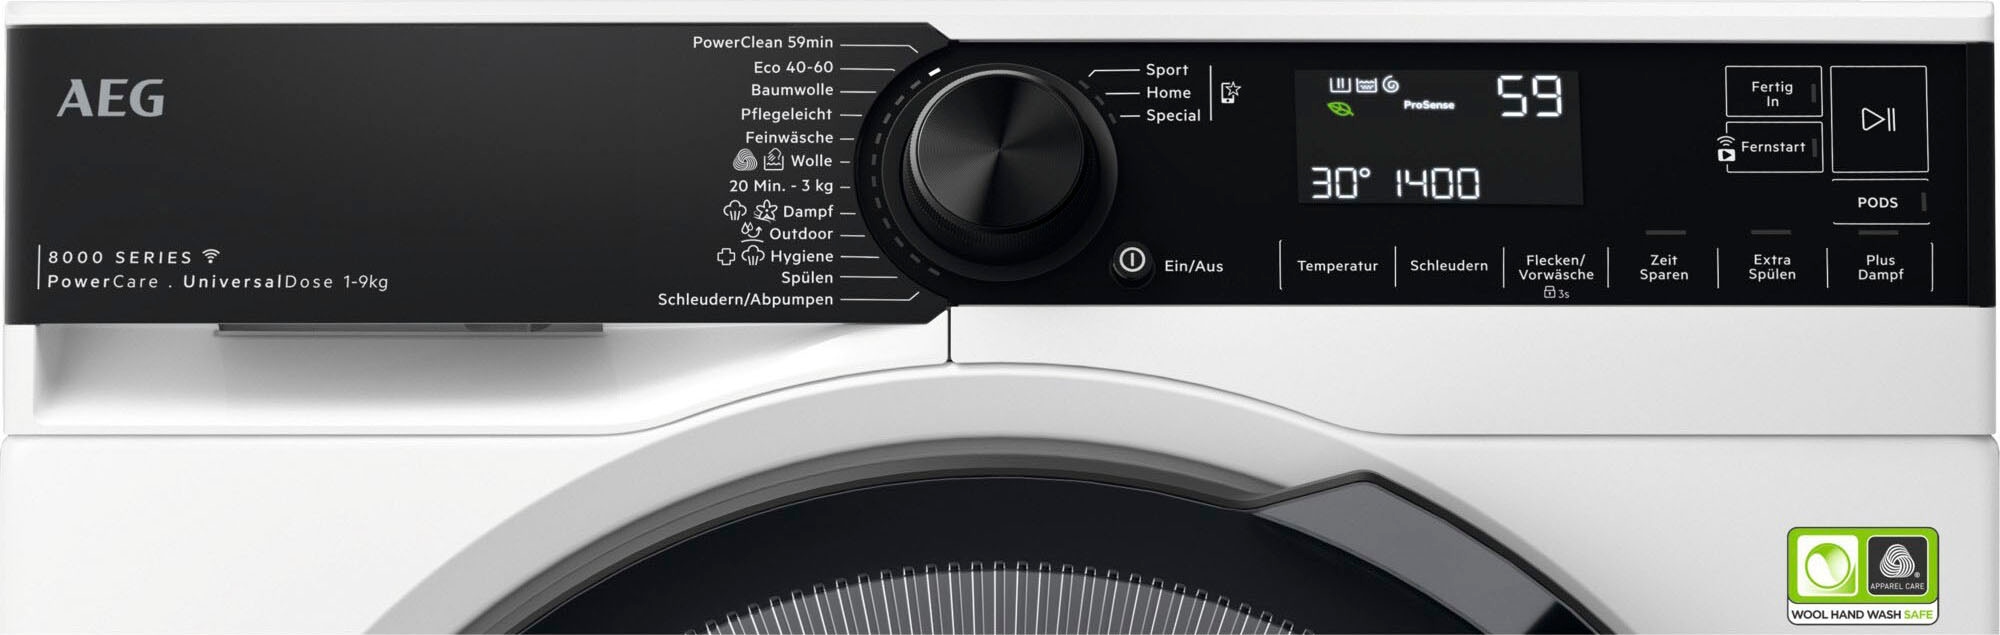 AEG Waschmaschine 9 Fleckenentfernung 8000 °C U/min, in - 30 OTTO Min. PowerClean kg, nur bei online Wifi bei 1400 »LR8E75490«, LR8E75490, PowerCare, & 59